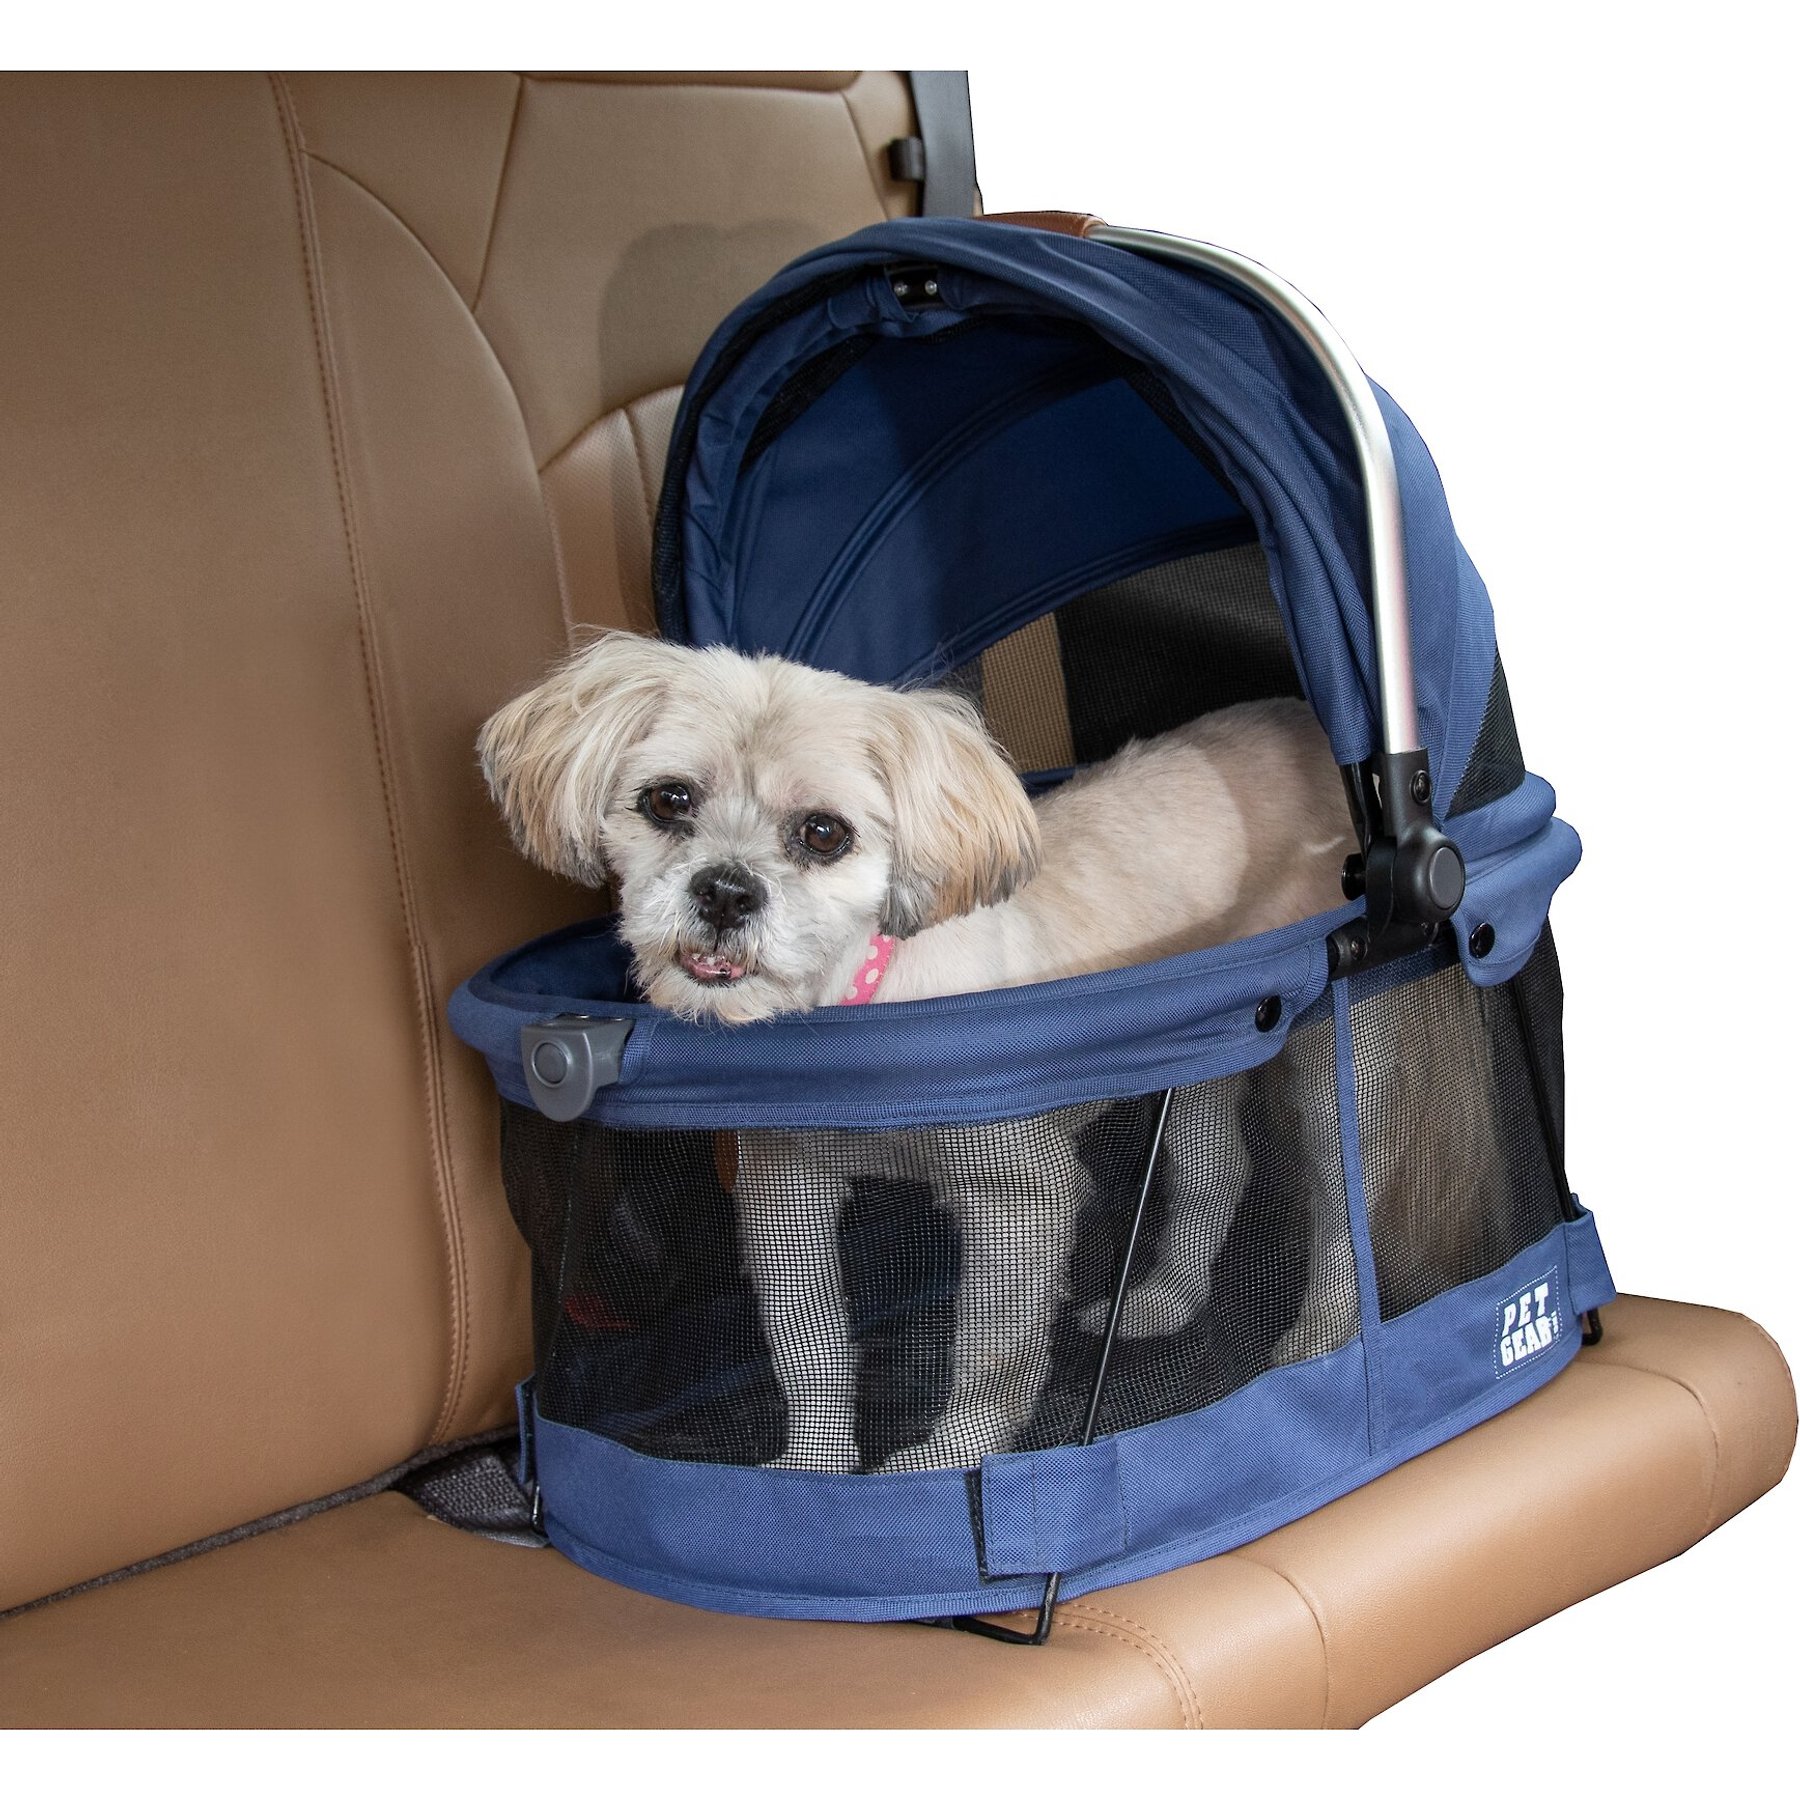 Trolley Car Pet Carrier Waterproof Folding Dog Cat Seat Travel Bag